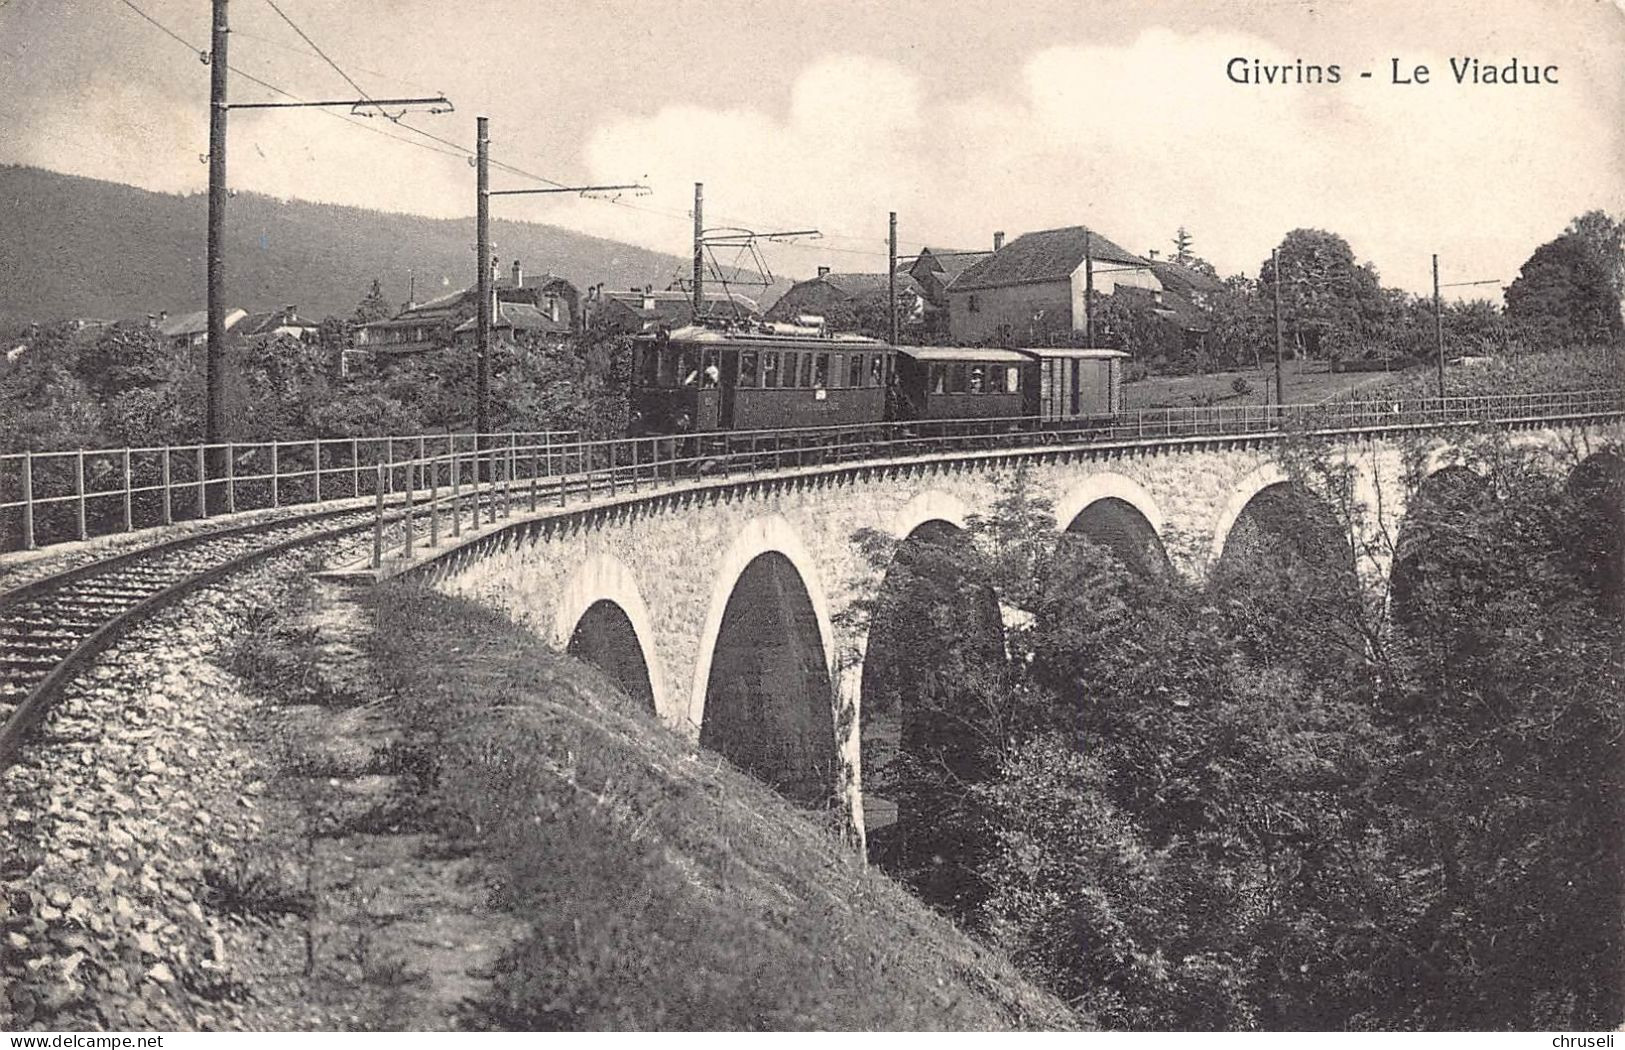 Givrins Eisenbahn - Givrins